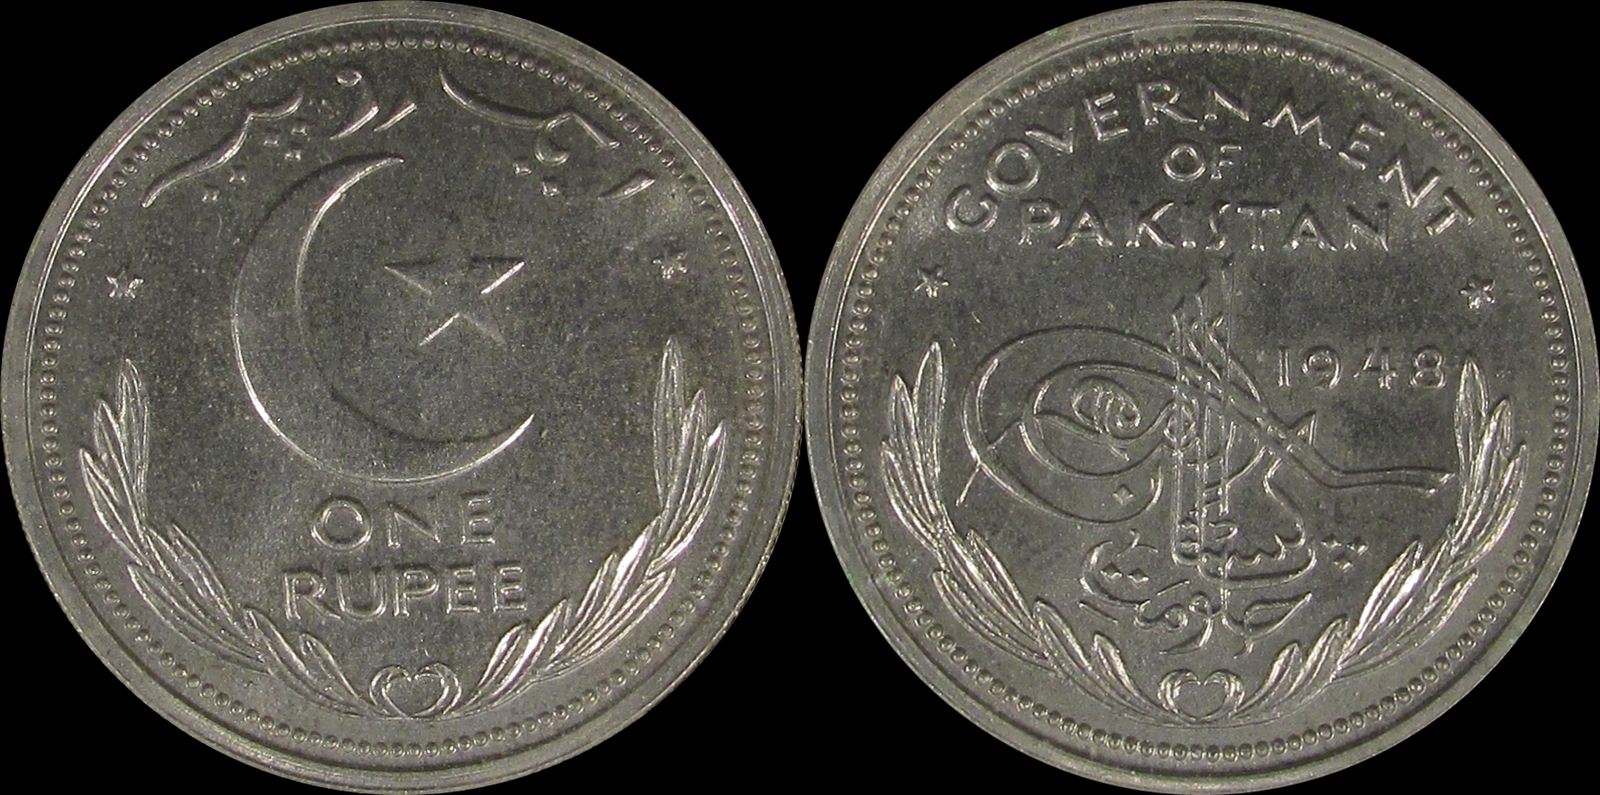 Pakistan 1948 rupee.jpg